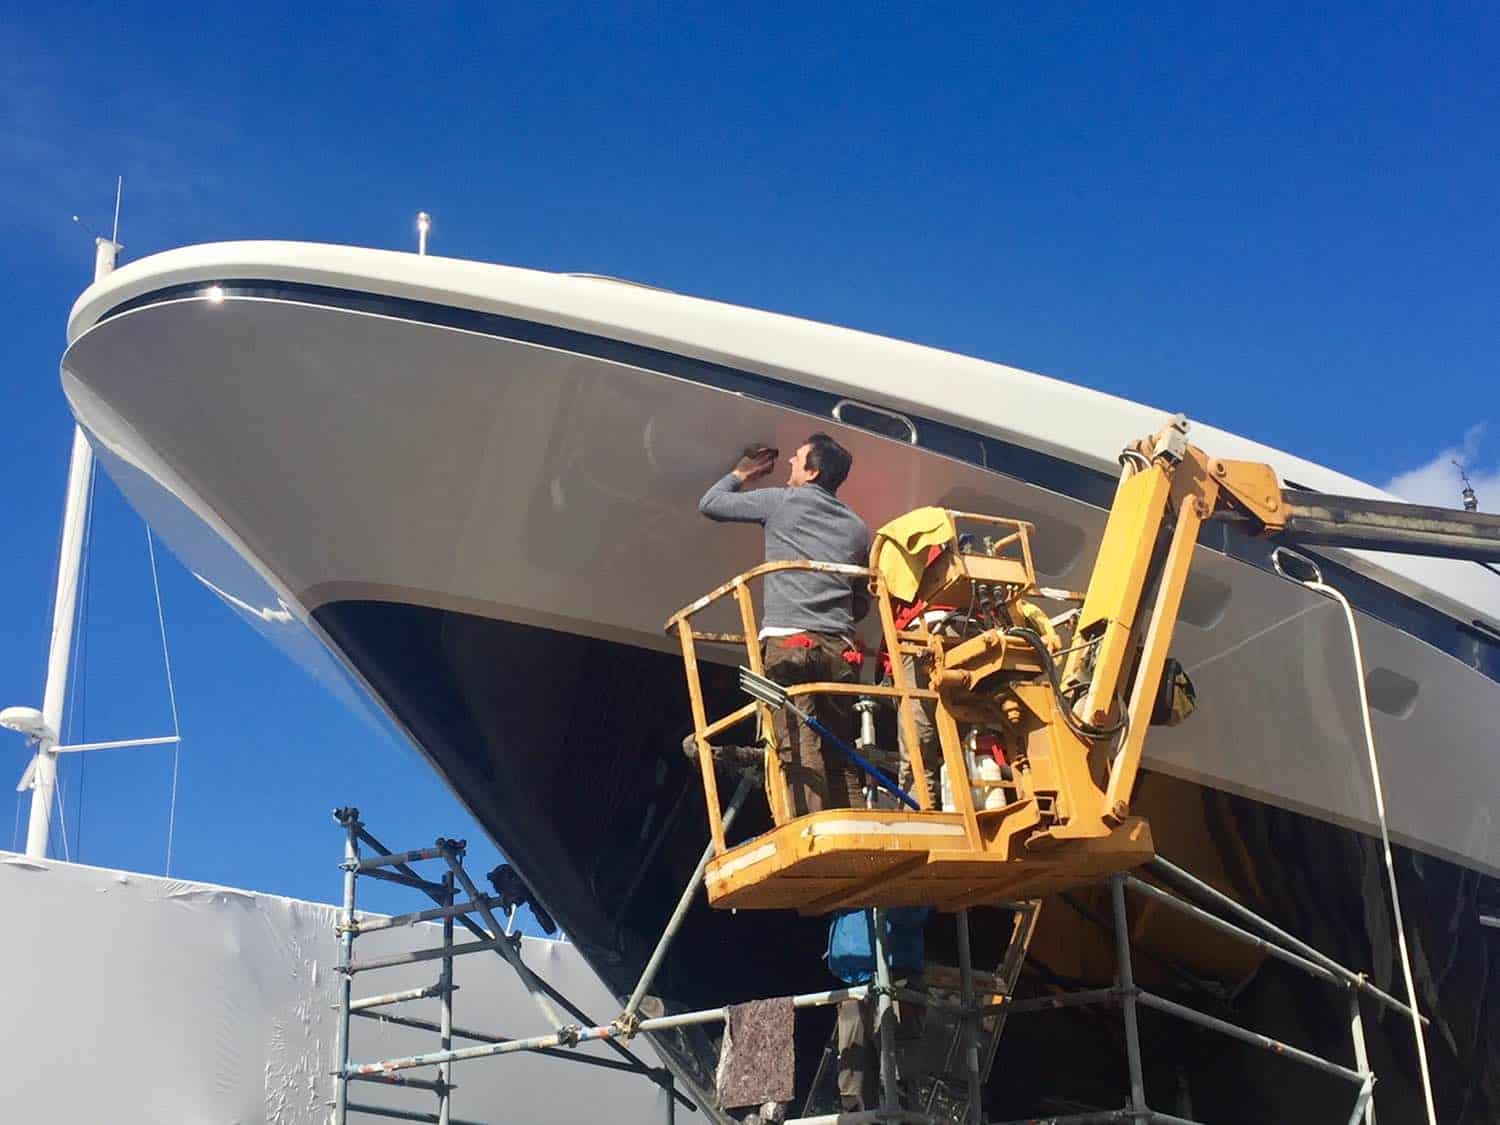 refit, winter storage and marine yacht management in Mallorca